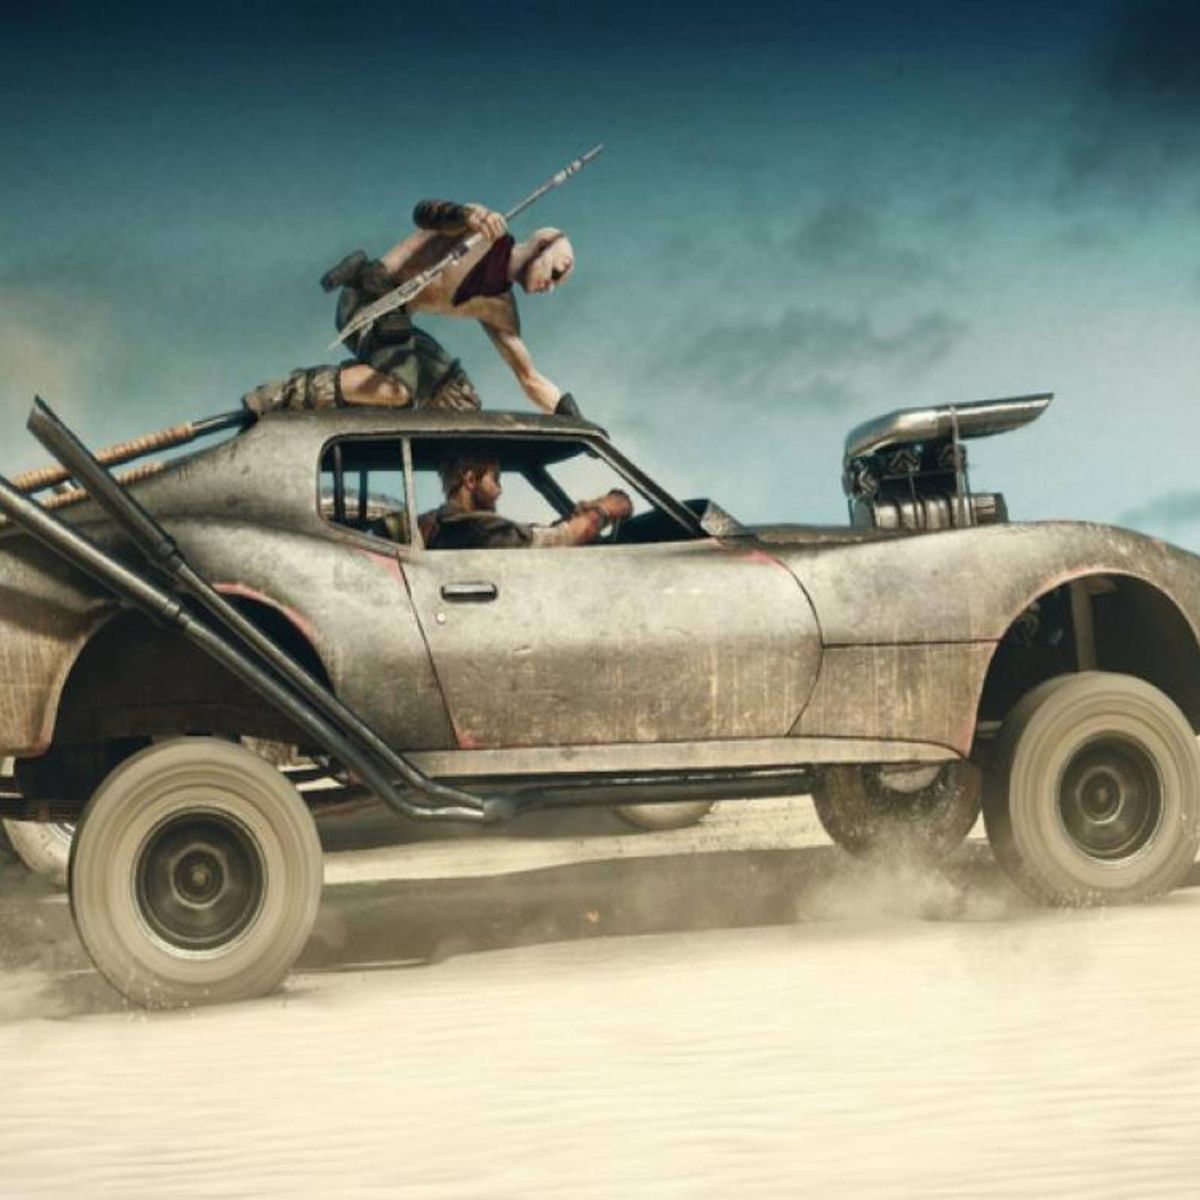  Mad Max: Fury Road